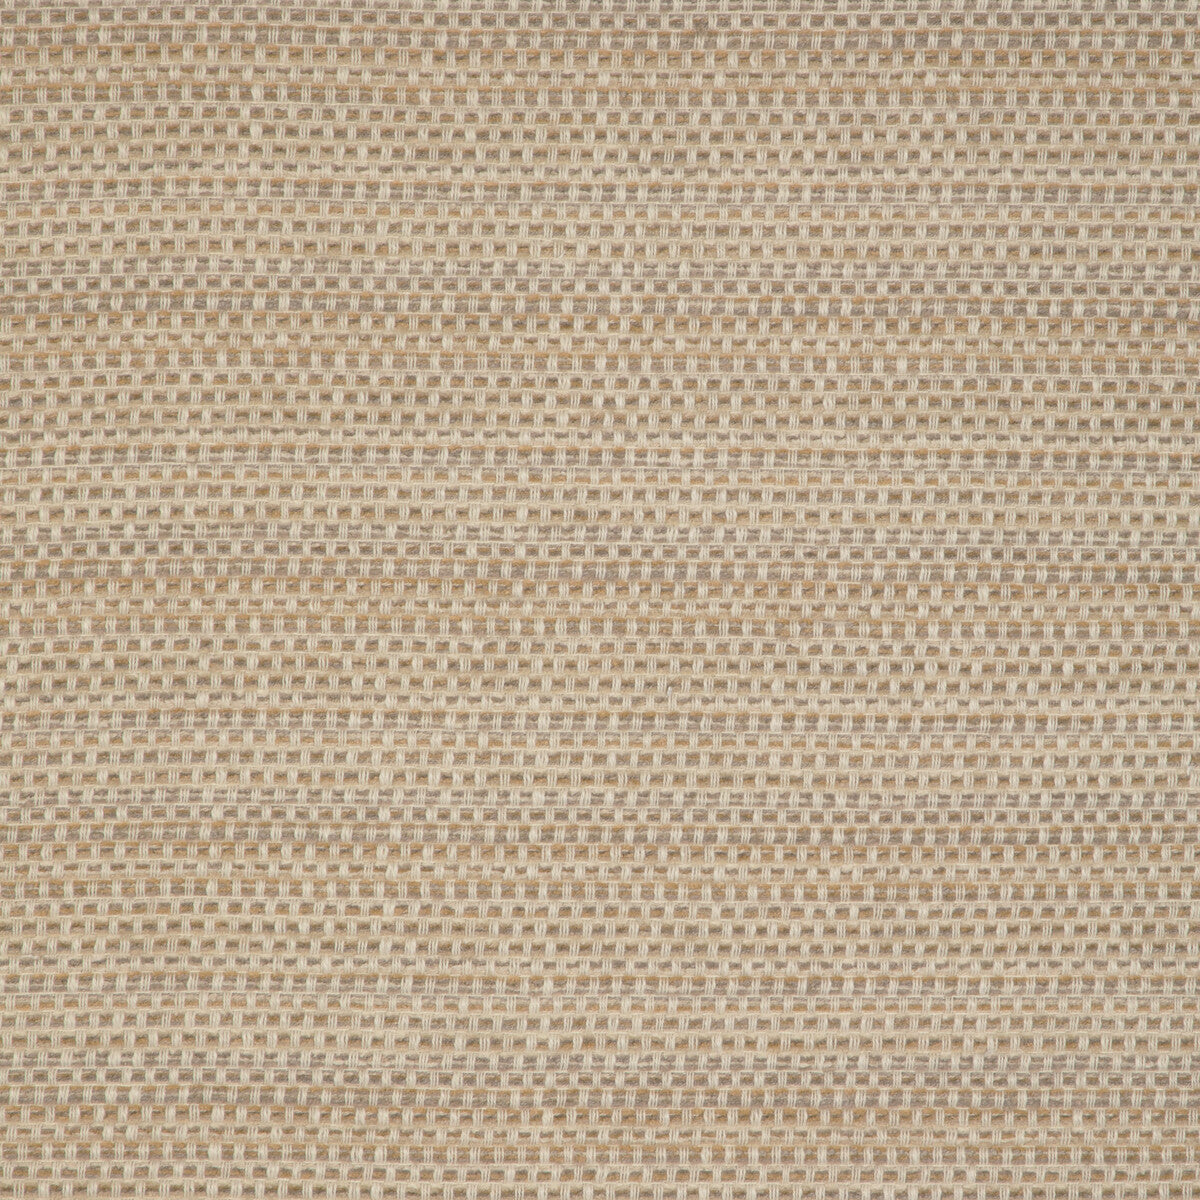 Kravet Smart fabric in 36994-16 color - pattern 36994.16.0 - by Kravet Smart in the Pavilion collection